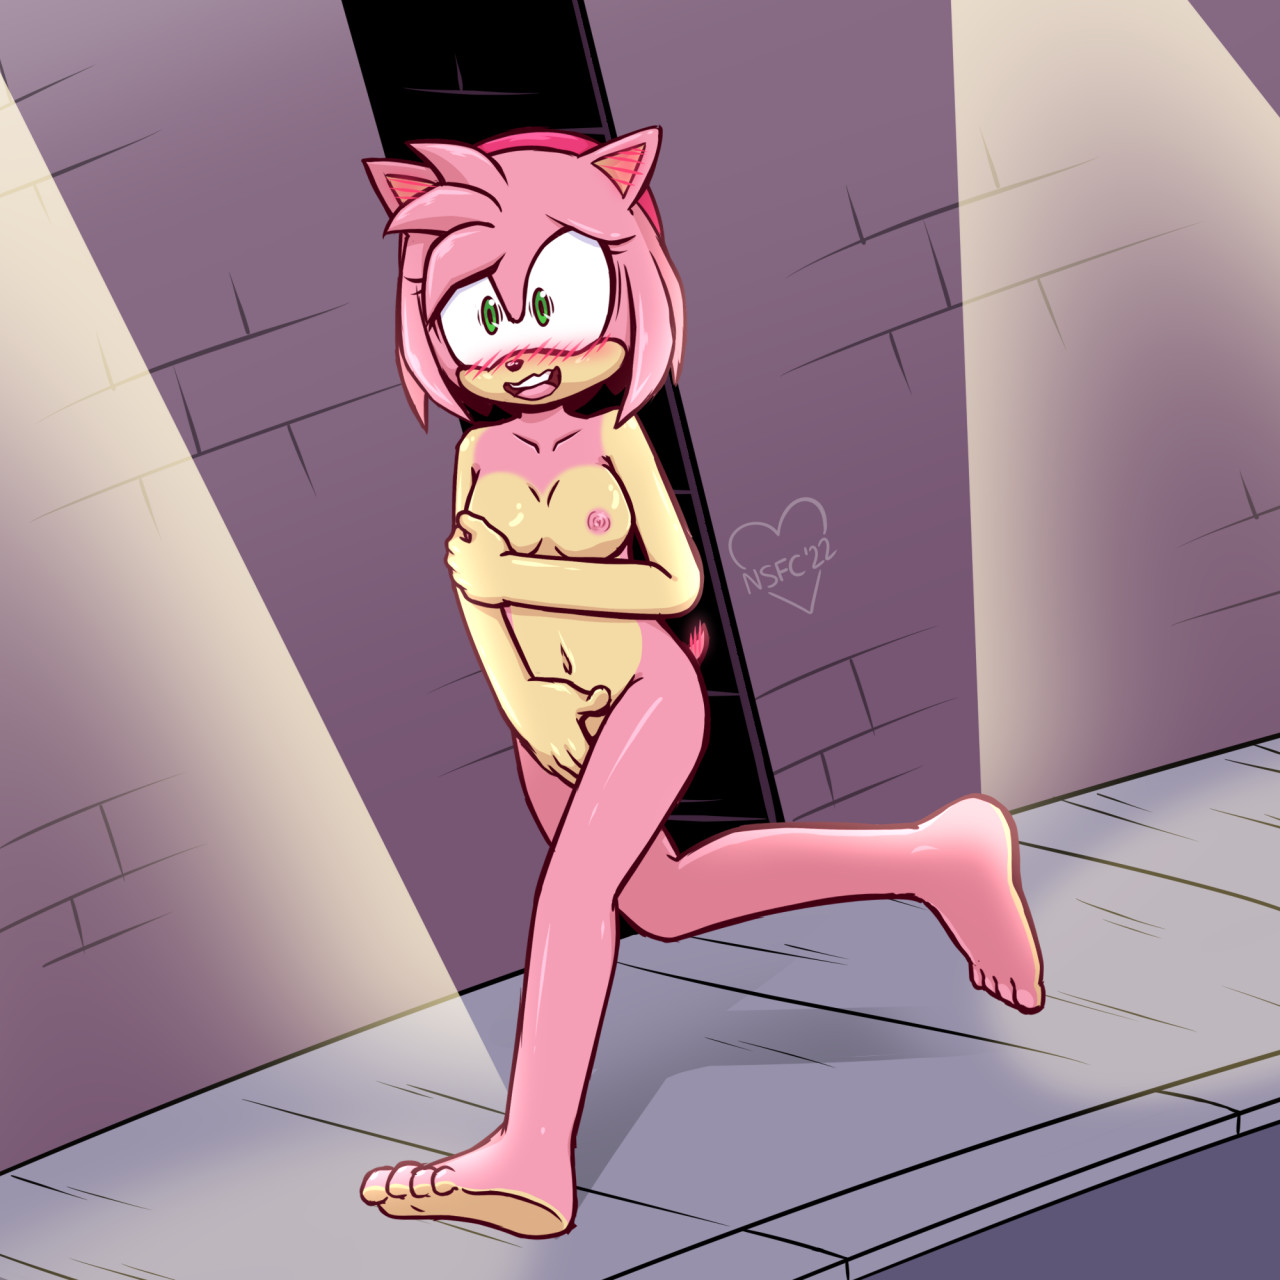 Amy rose naked